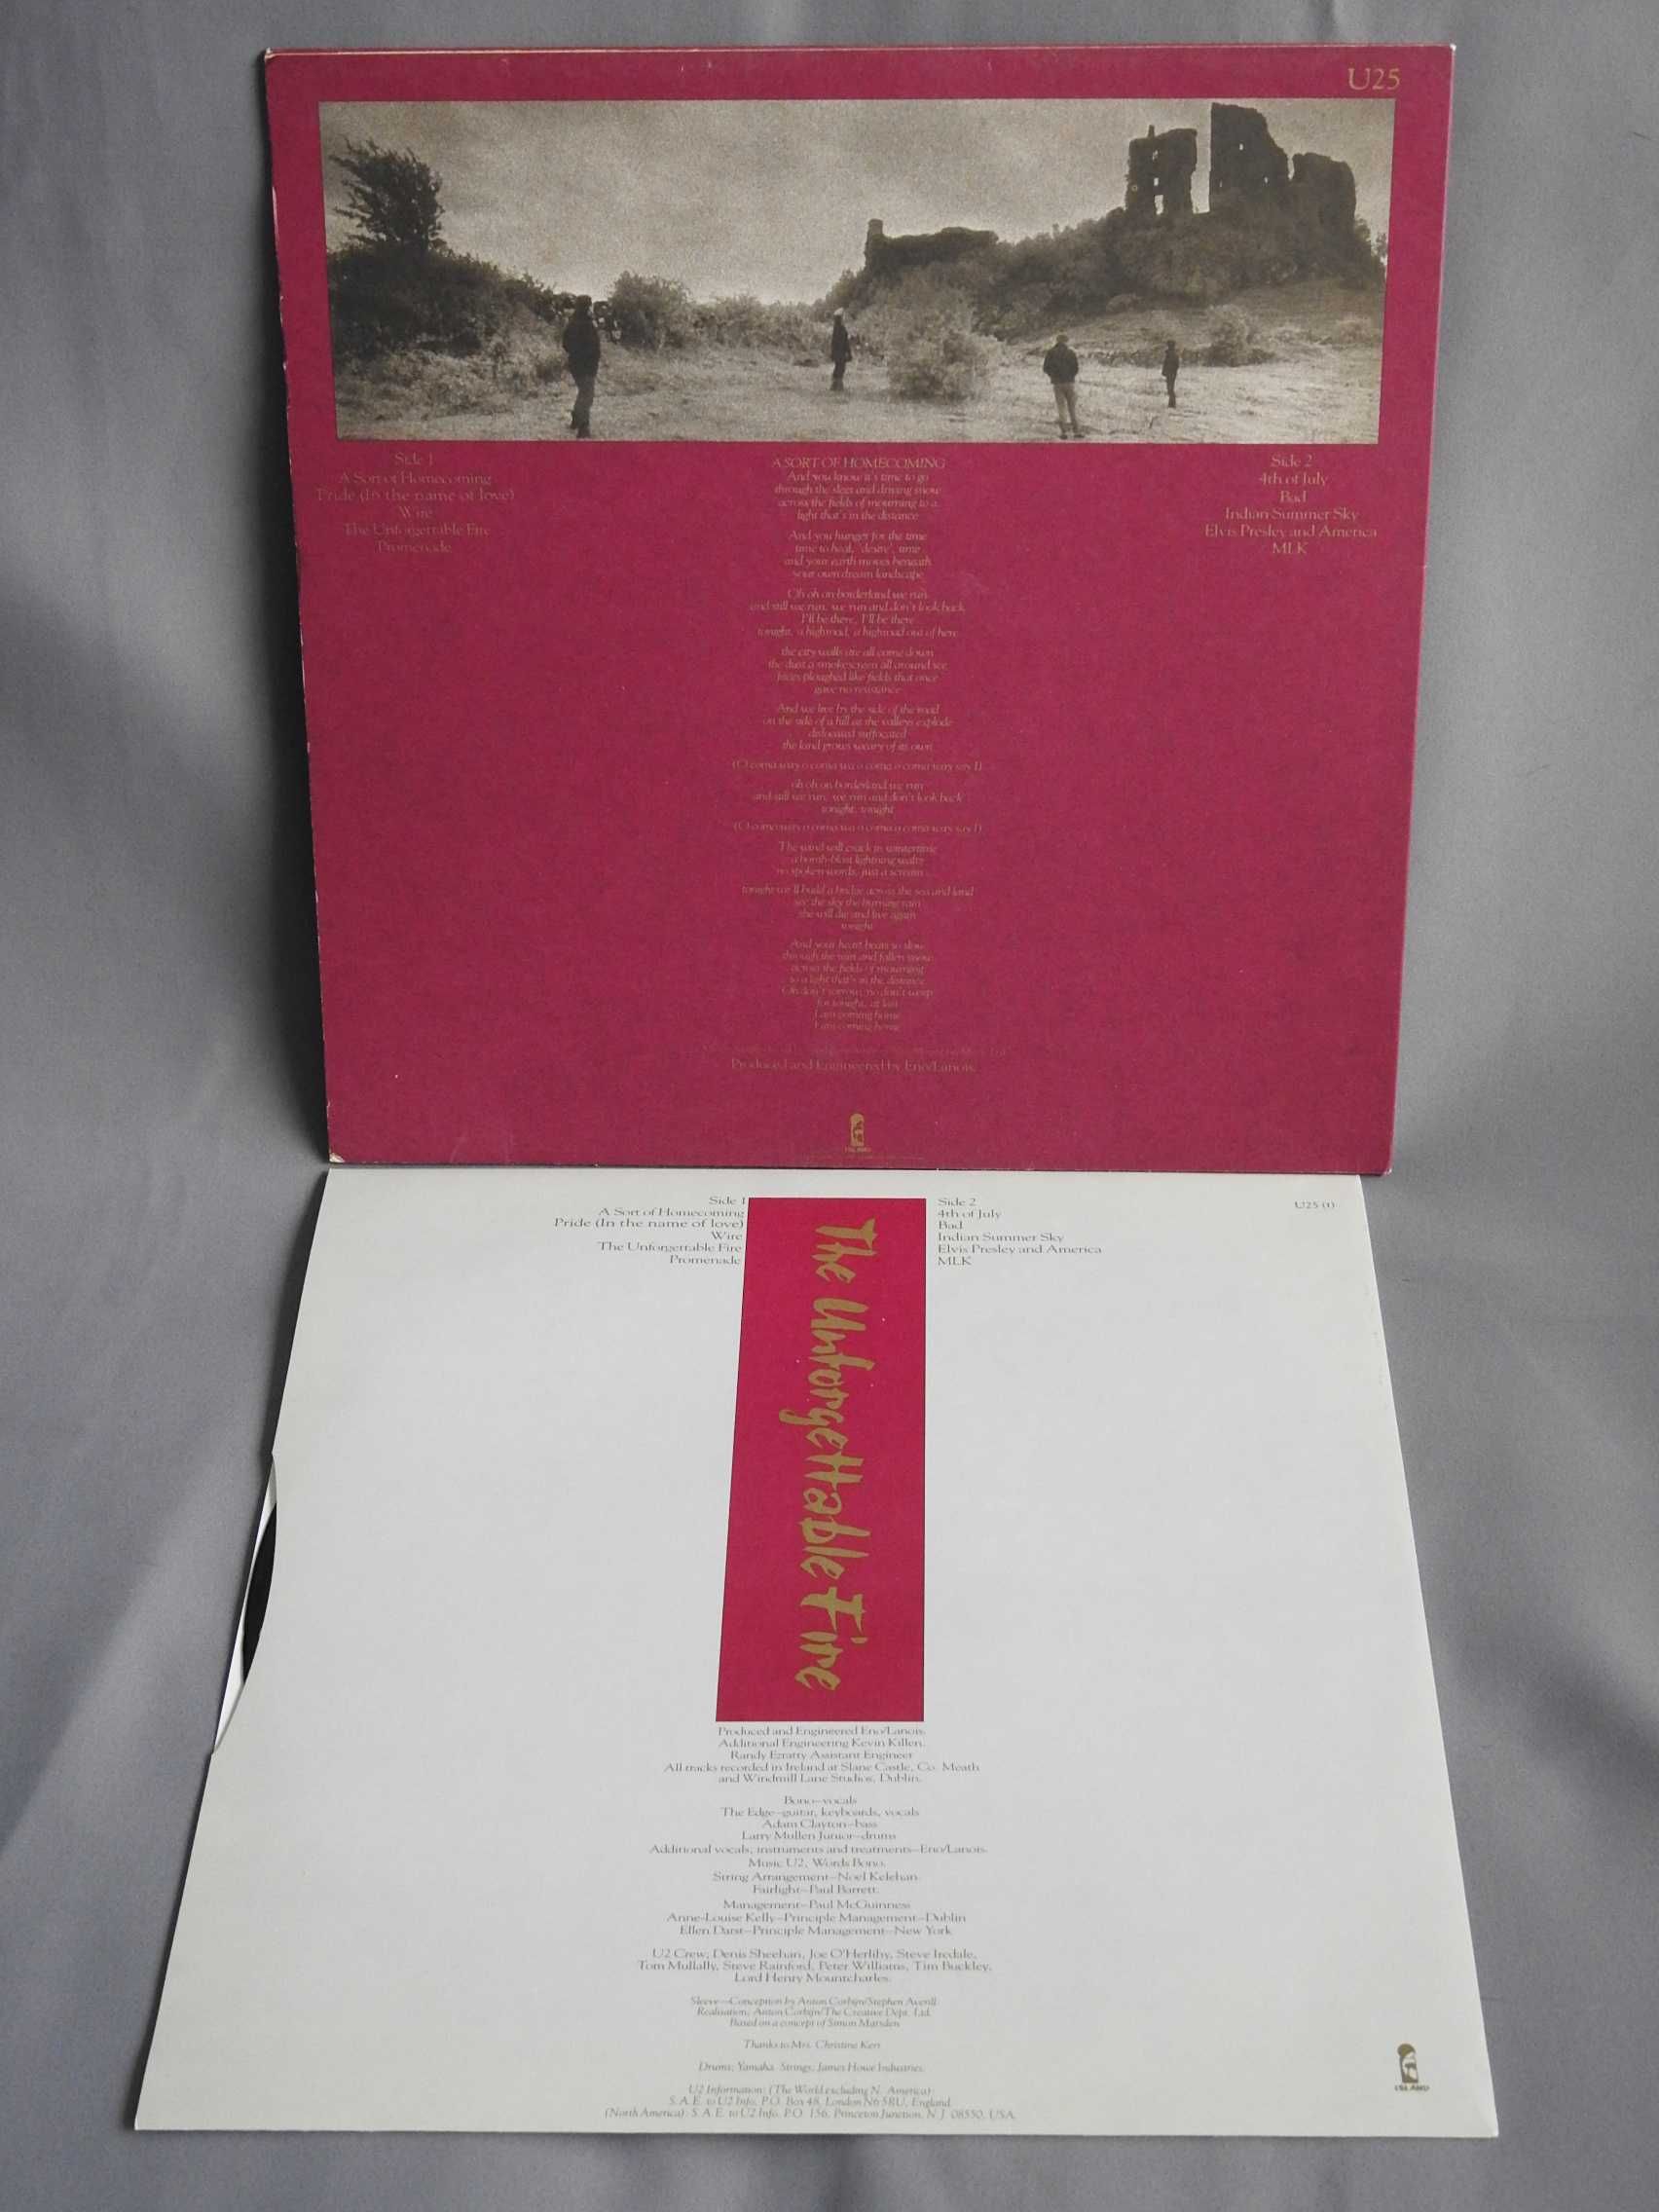 U2 The Unforgettable Fire пластинка UK Великобритания 1984 NM 1 press